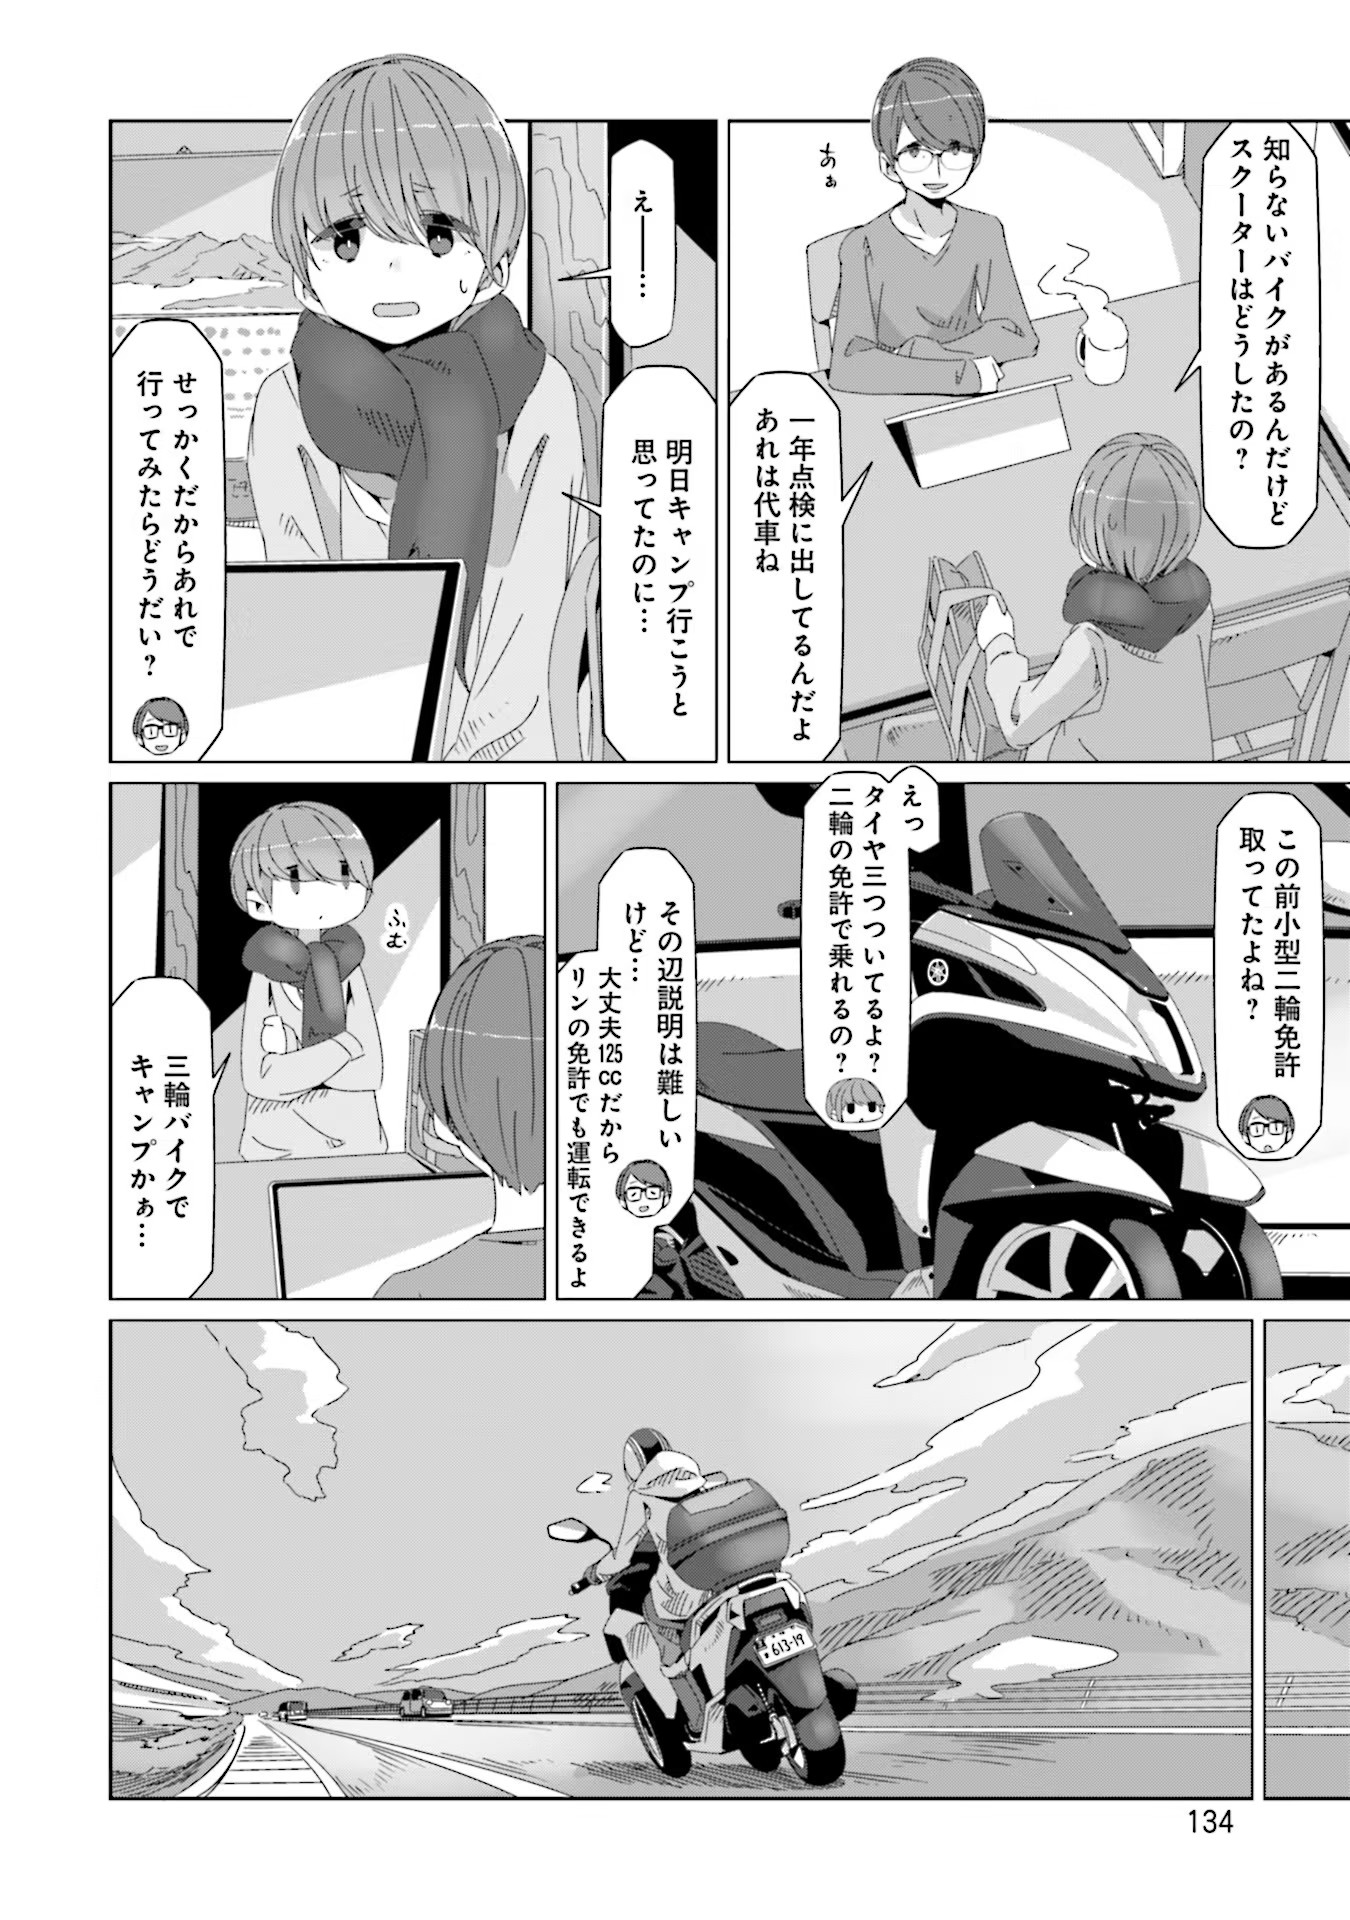 Yuru Camp - Chapter 57.2 - Page 2